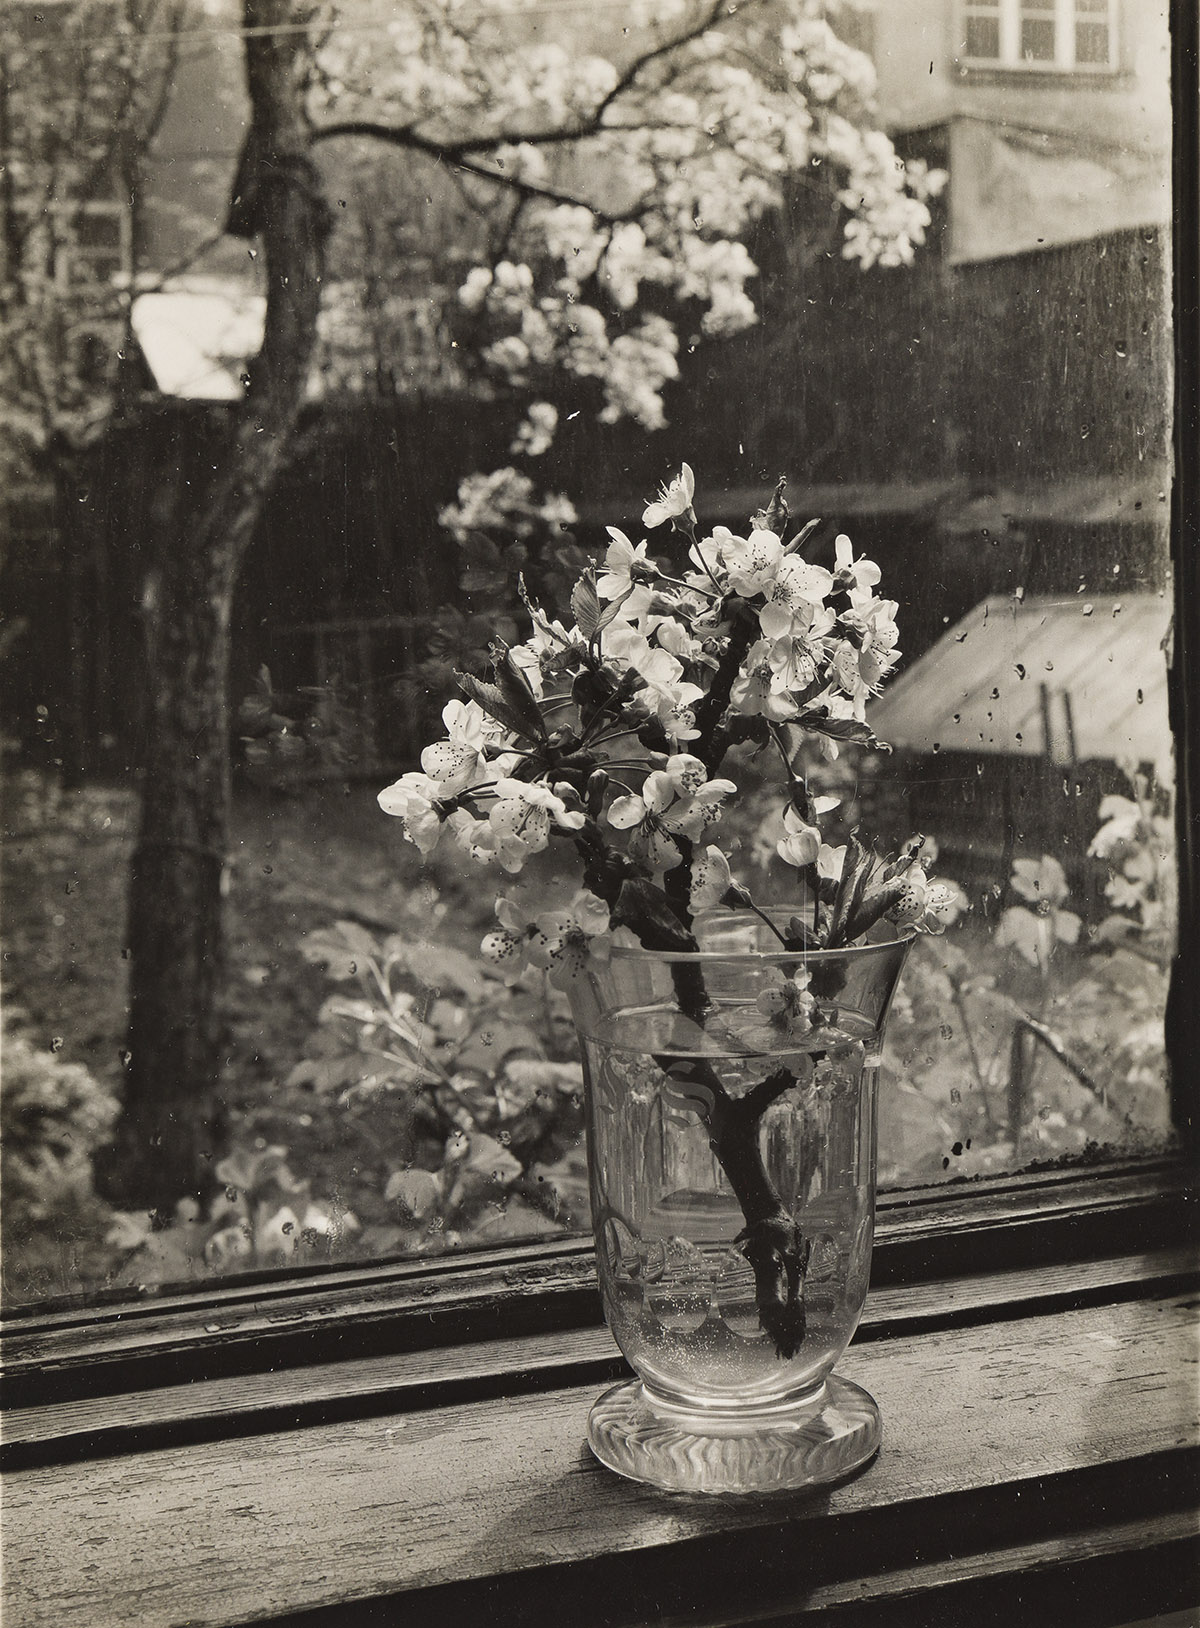 JOSEF SUDEK (1896-1976) Window in studio.